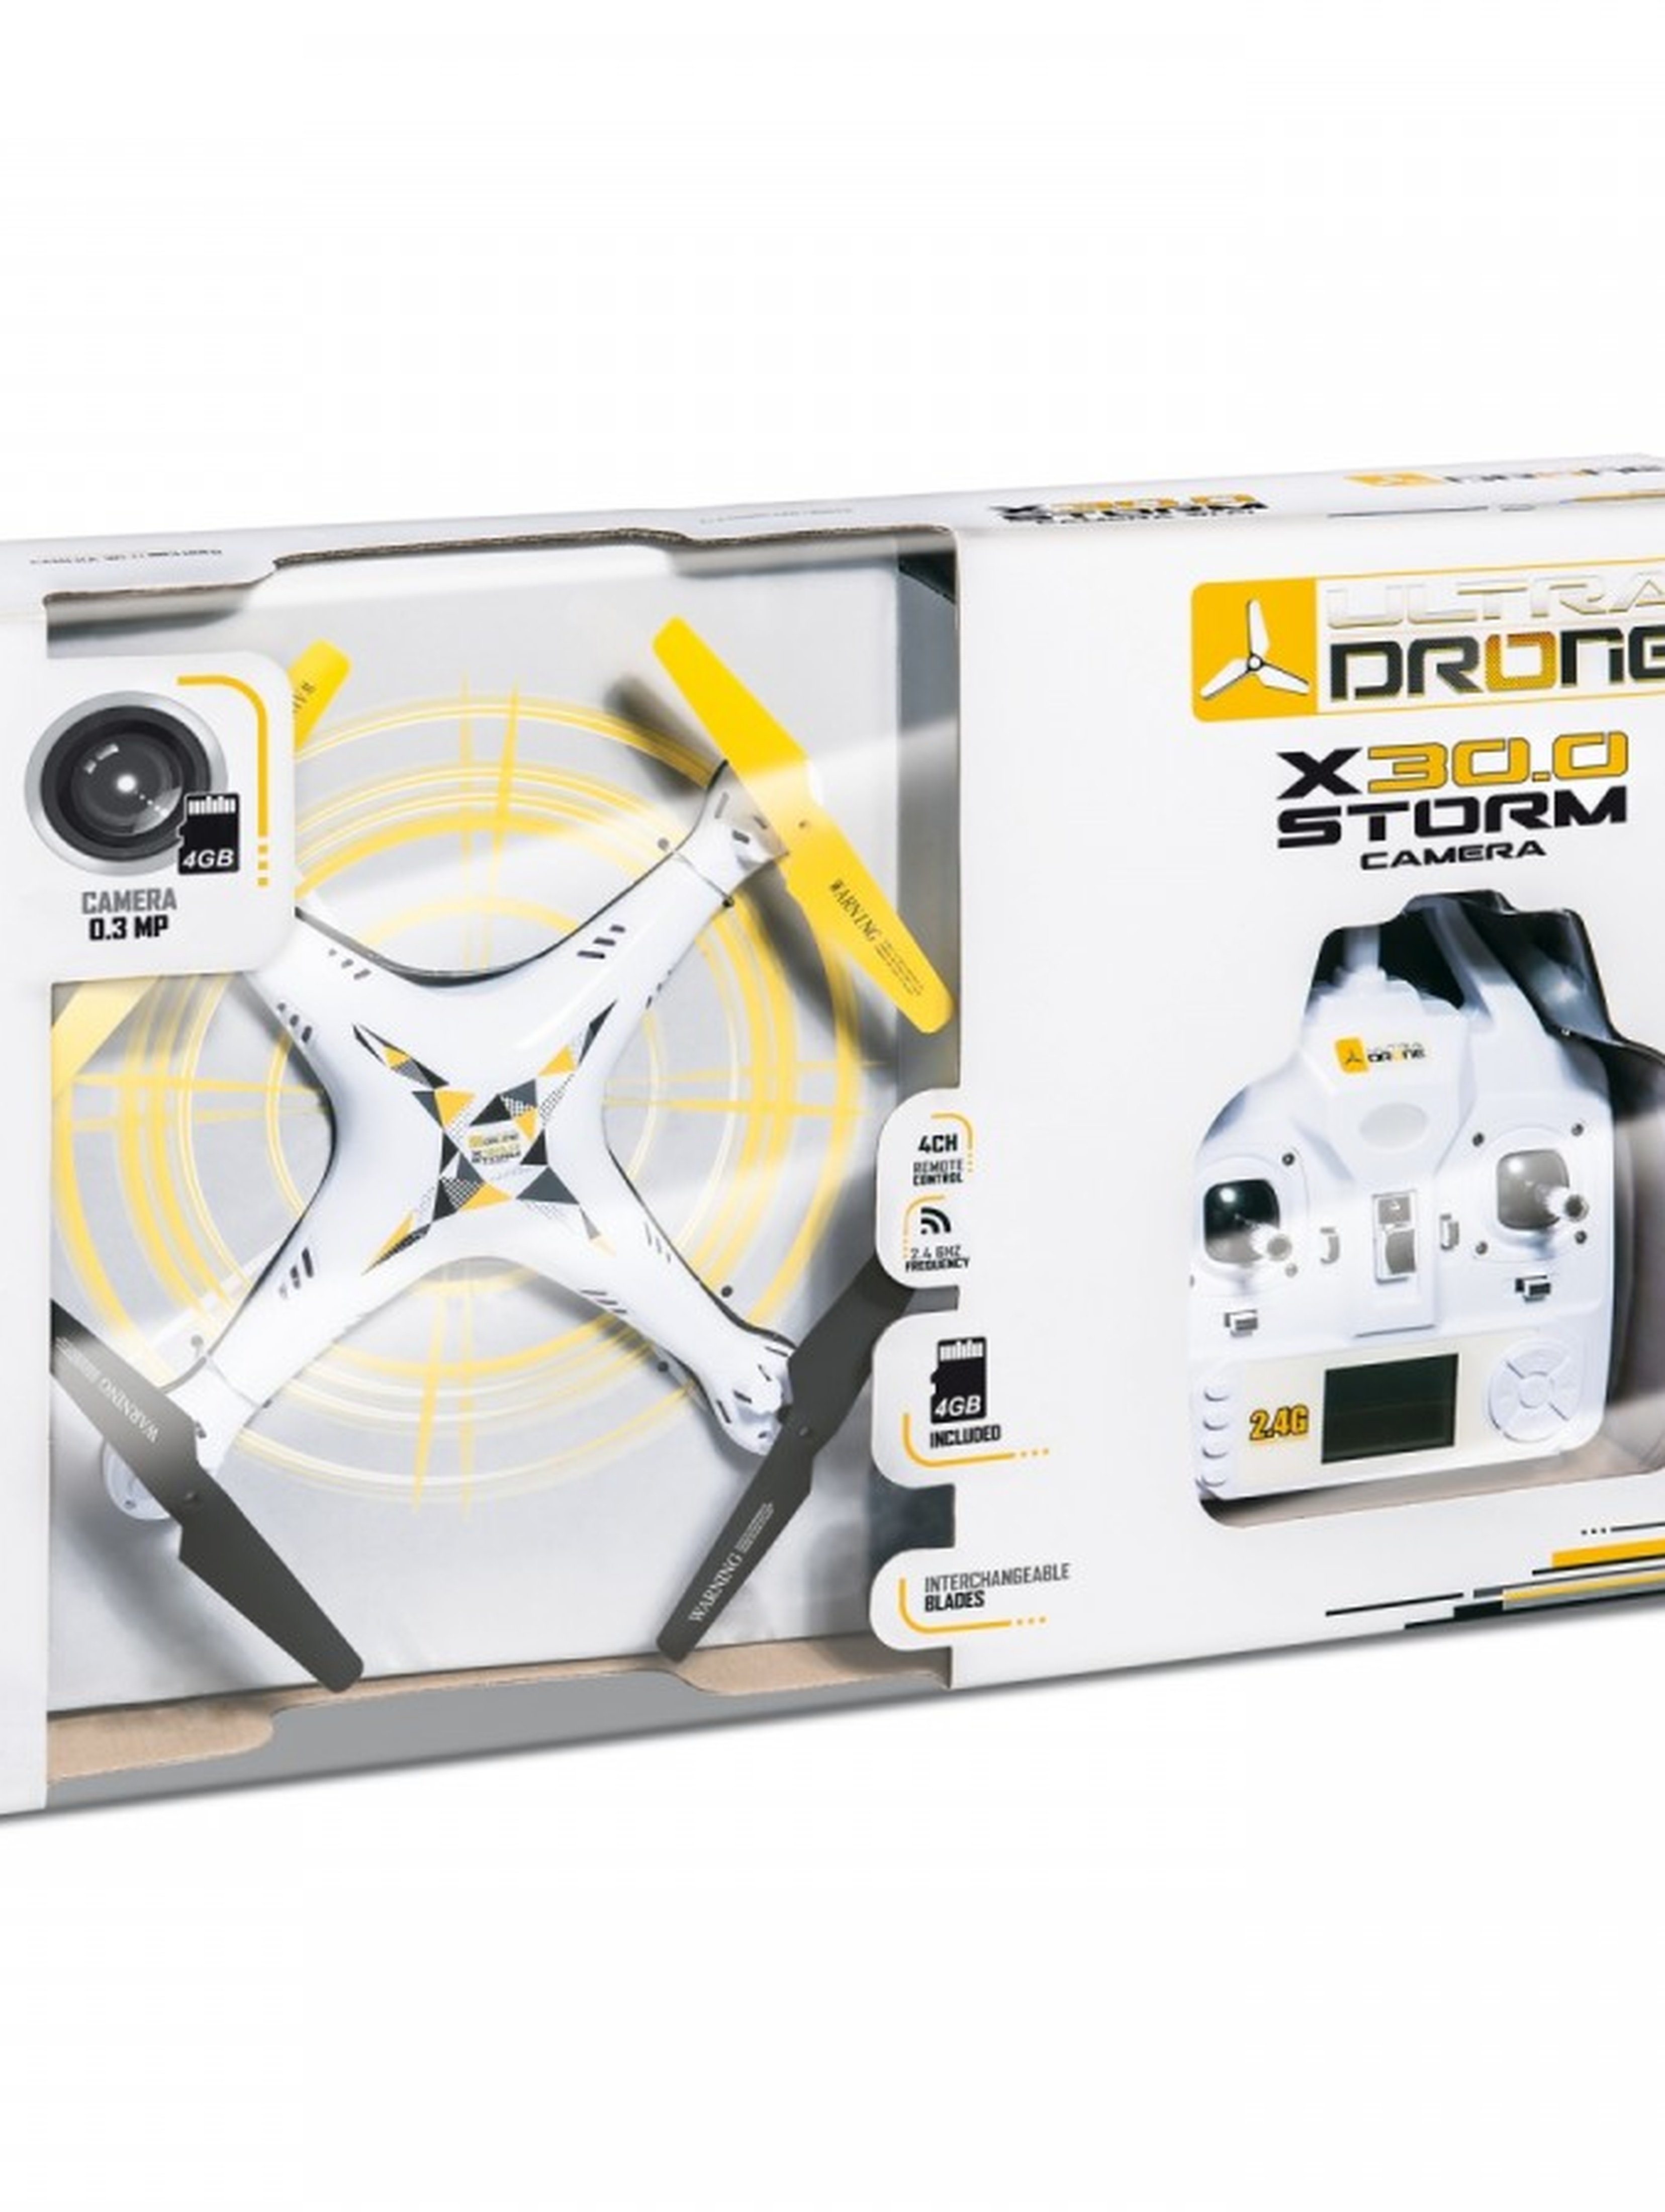 Dron R/C X30.0 Storm z kamerą